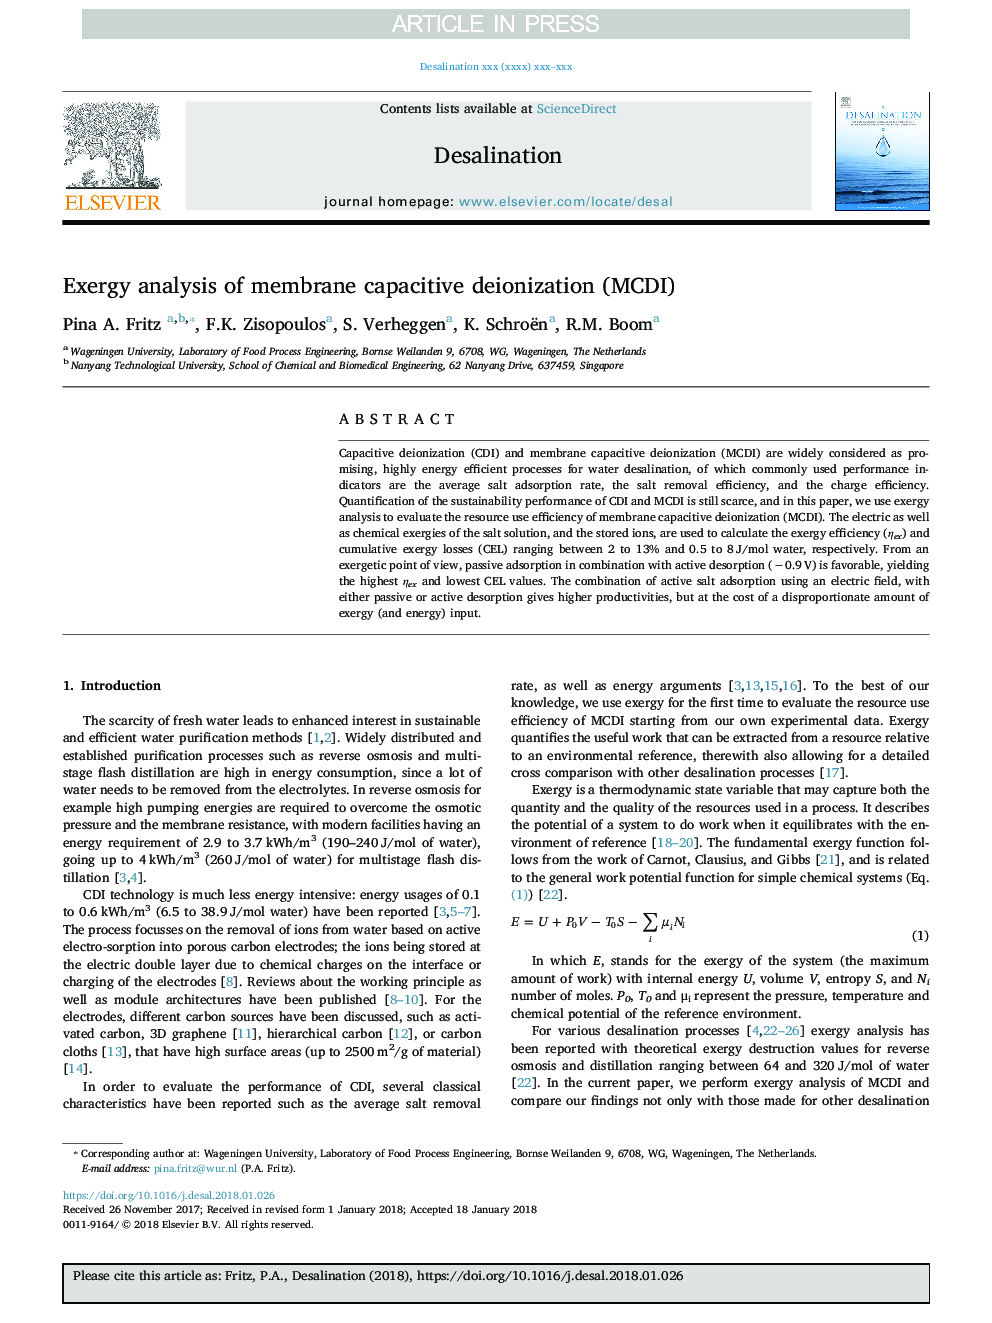 Exergy analysis of membrane capacitive deionization (MCDI)